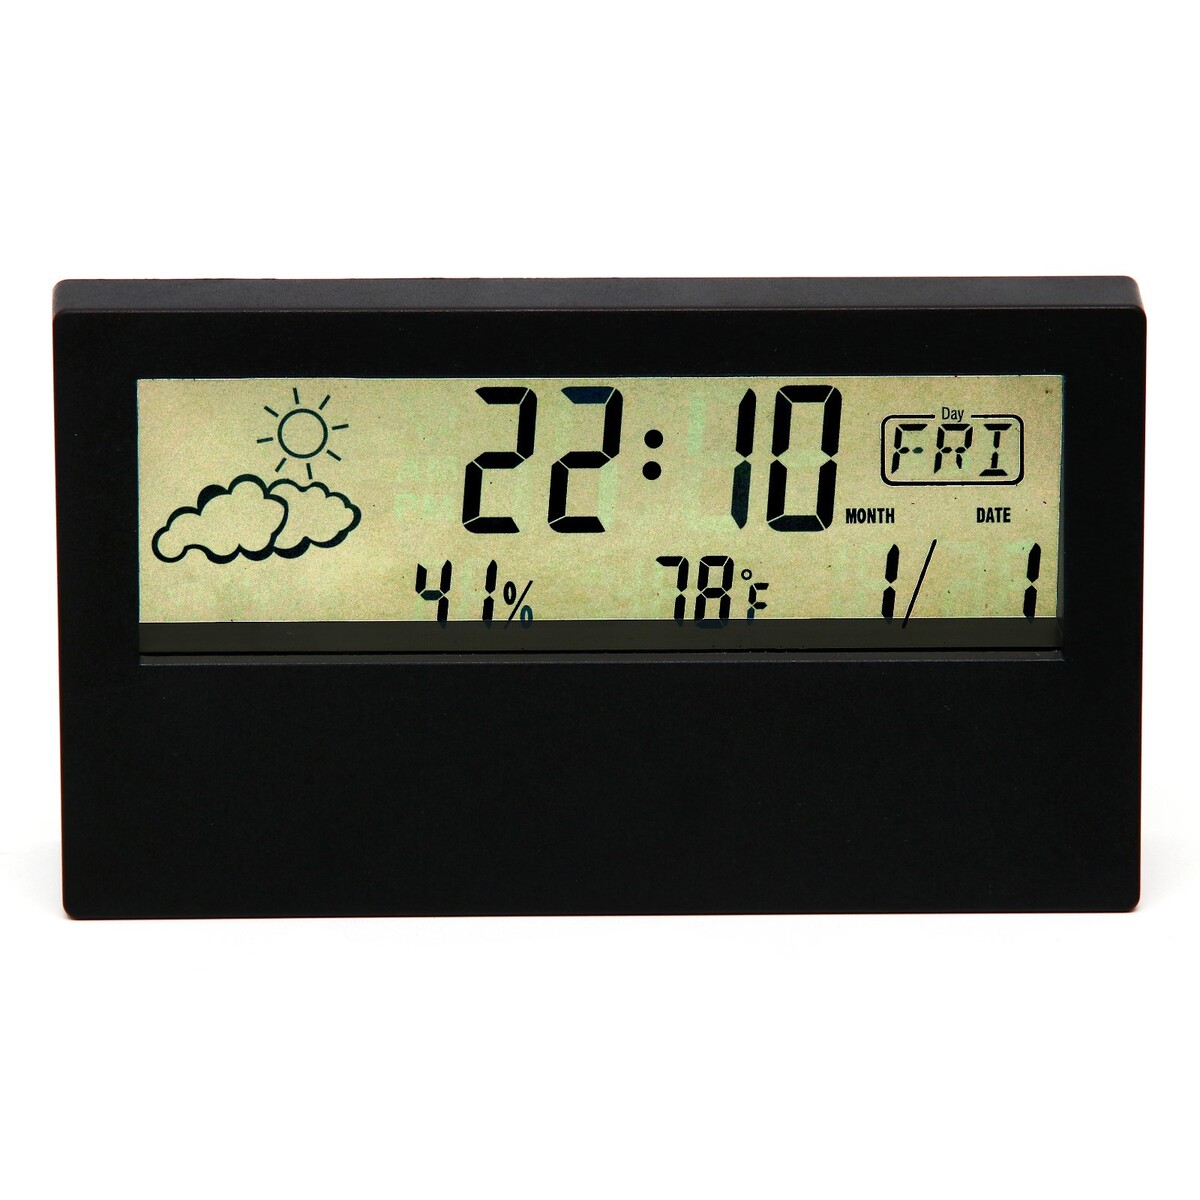 Часы - будильник электронные настольные: термометр, календарь, гигрометр, 13.3 х 7.4 см часы будильник электронные настольные календарь термометр гигрометр 15 5 х 9 5см 3ааа